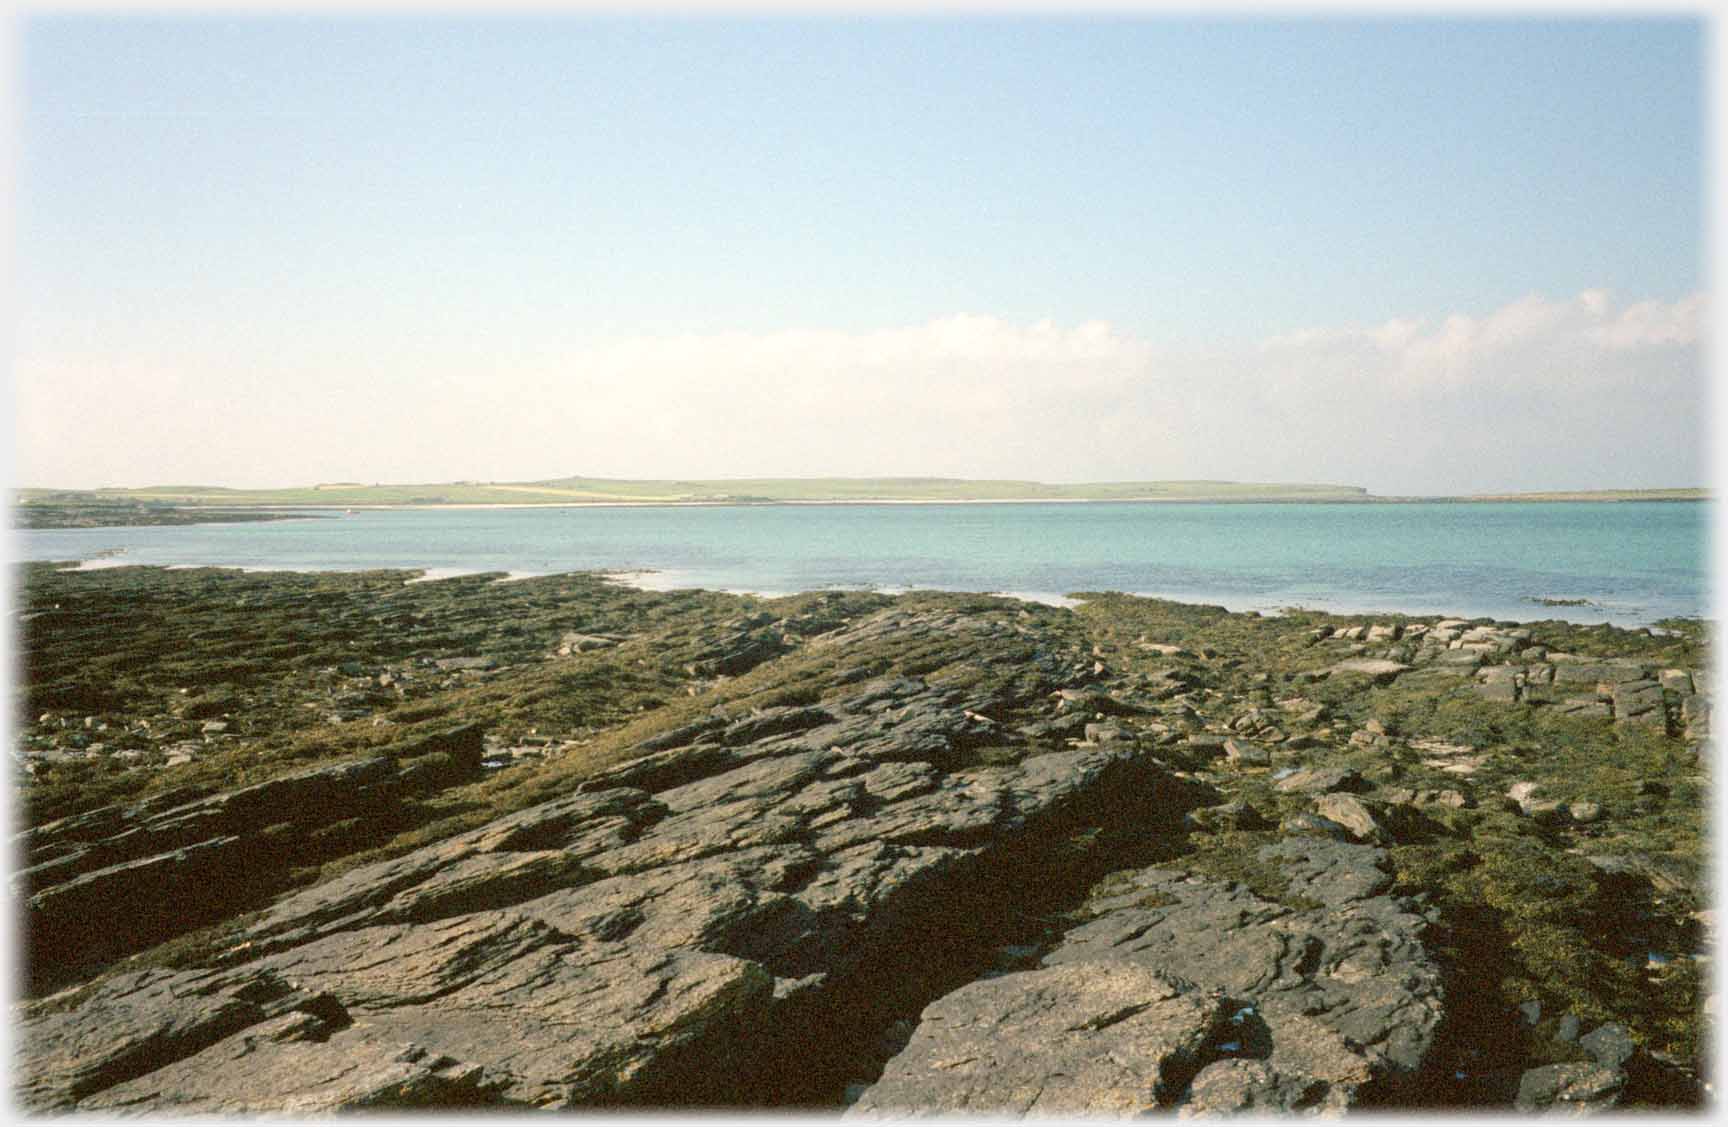 Flat shelving rocks running to blue-green sea.